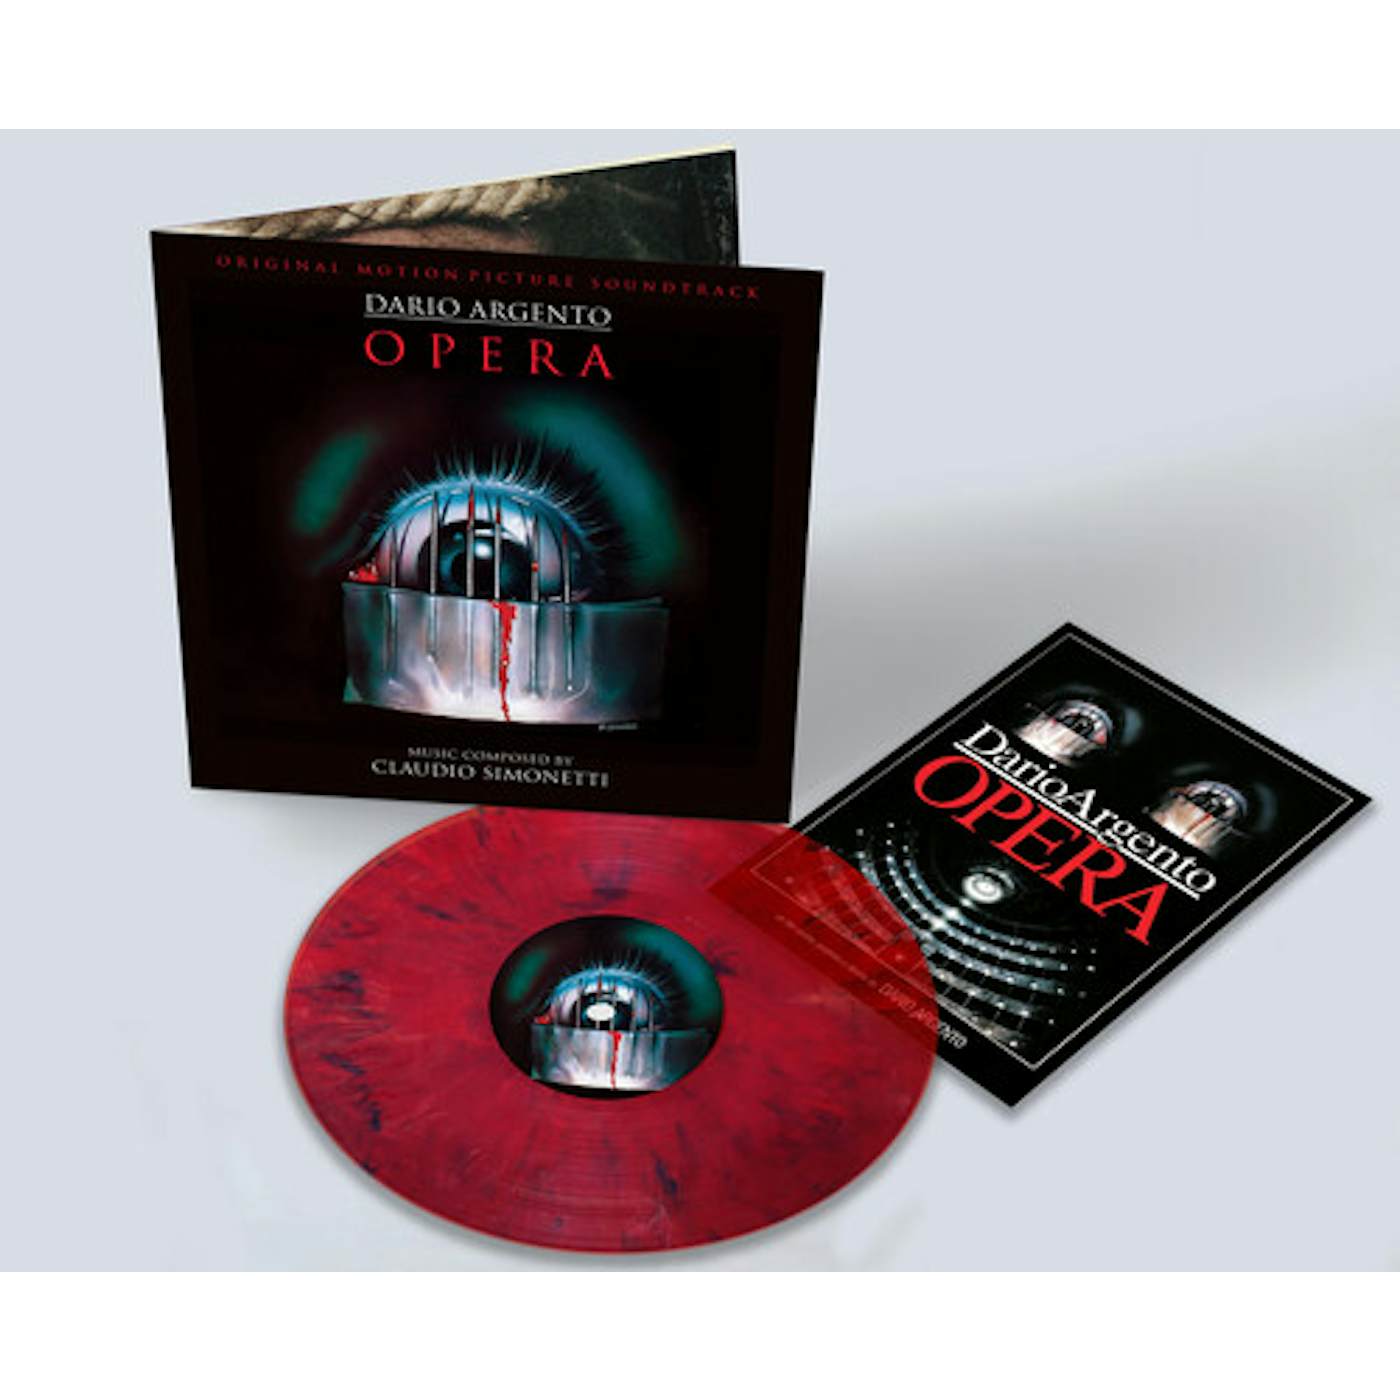 Claudio Simonetti DARIO ARGENTO'S OPERA - Original Soundtrack Vinyl Record